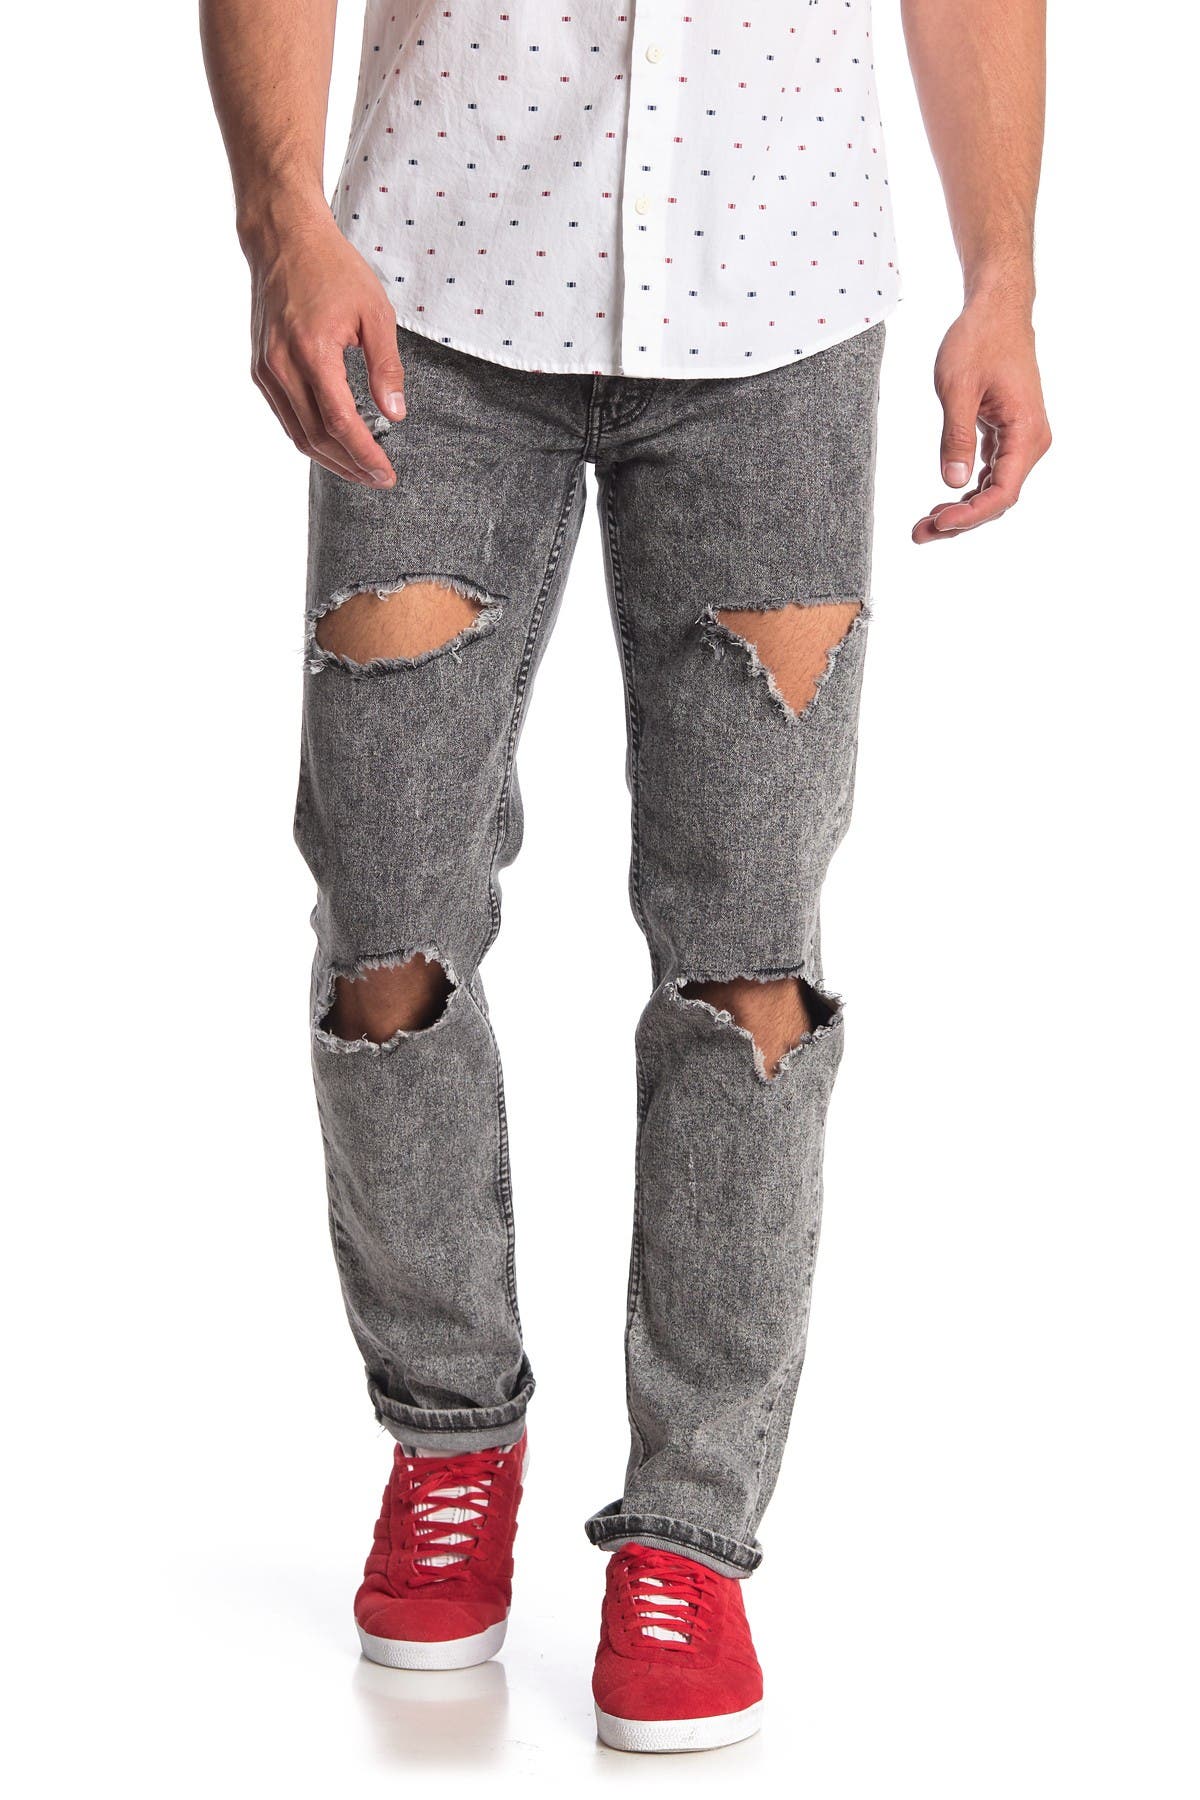 levi's 511 distressed jeans